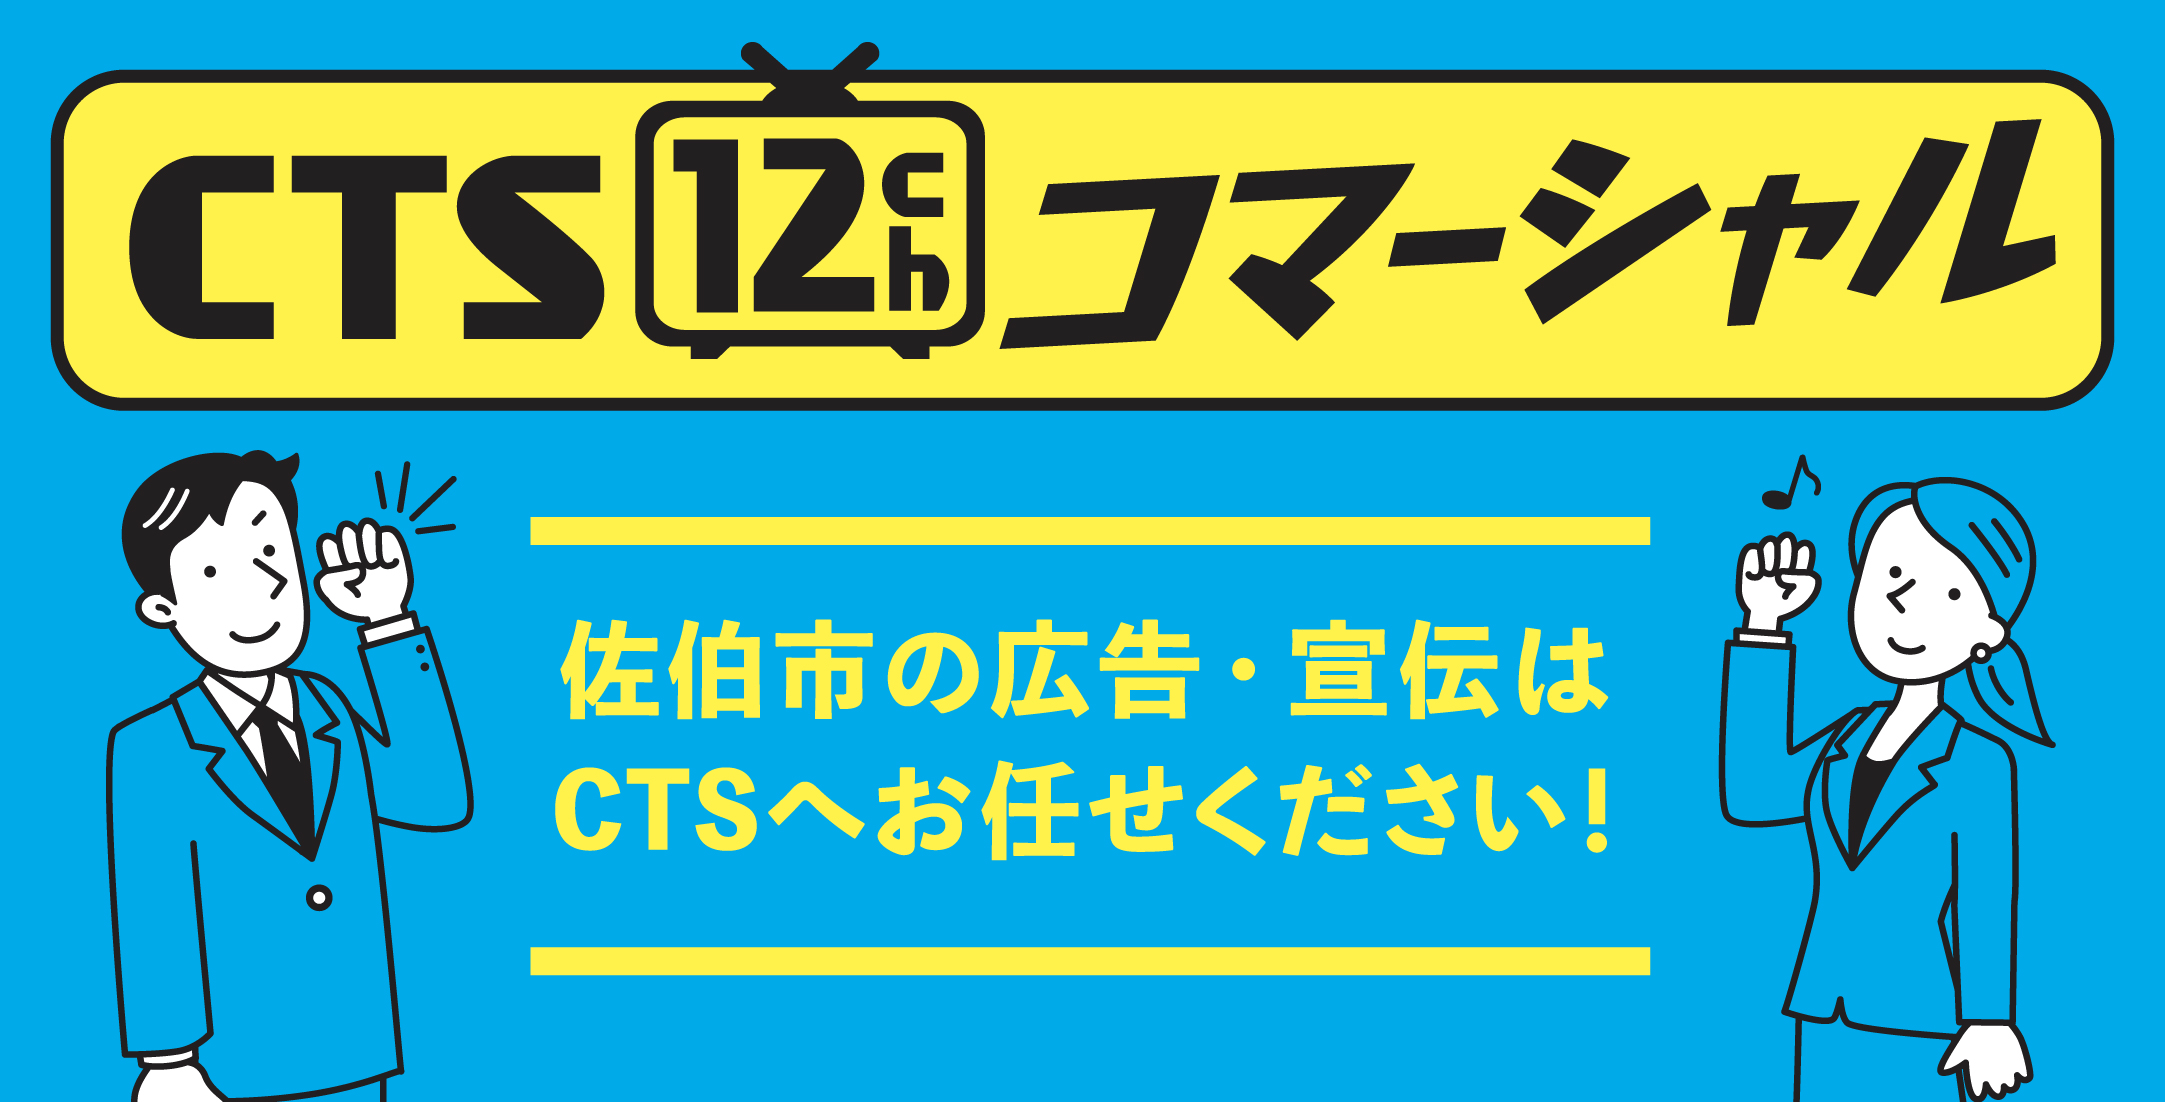 CTS 12chコマーシャル